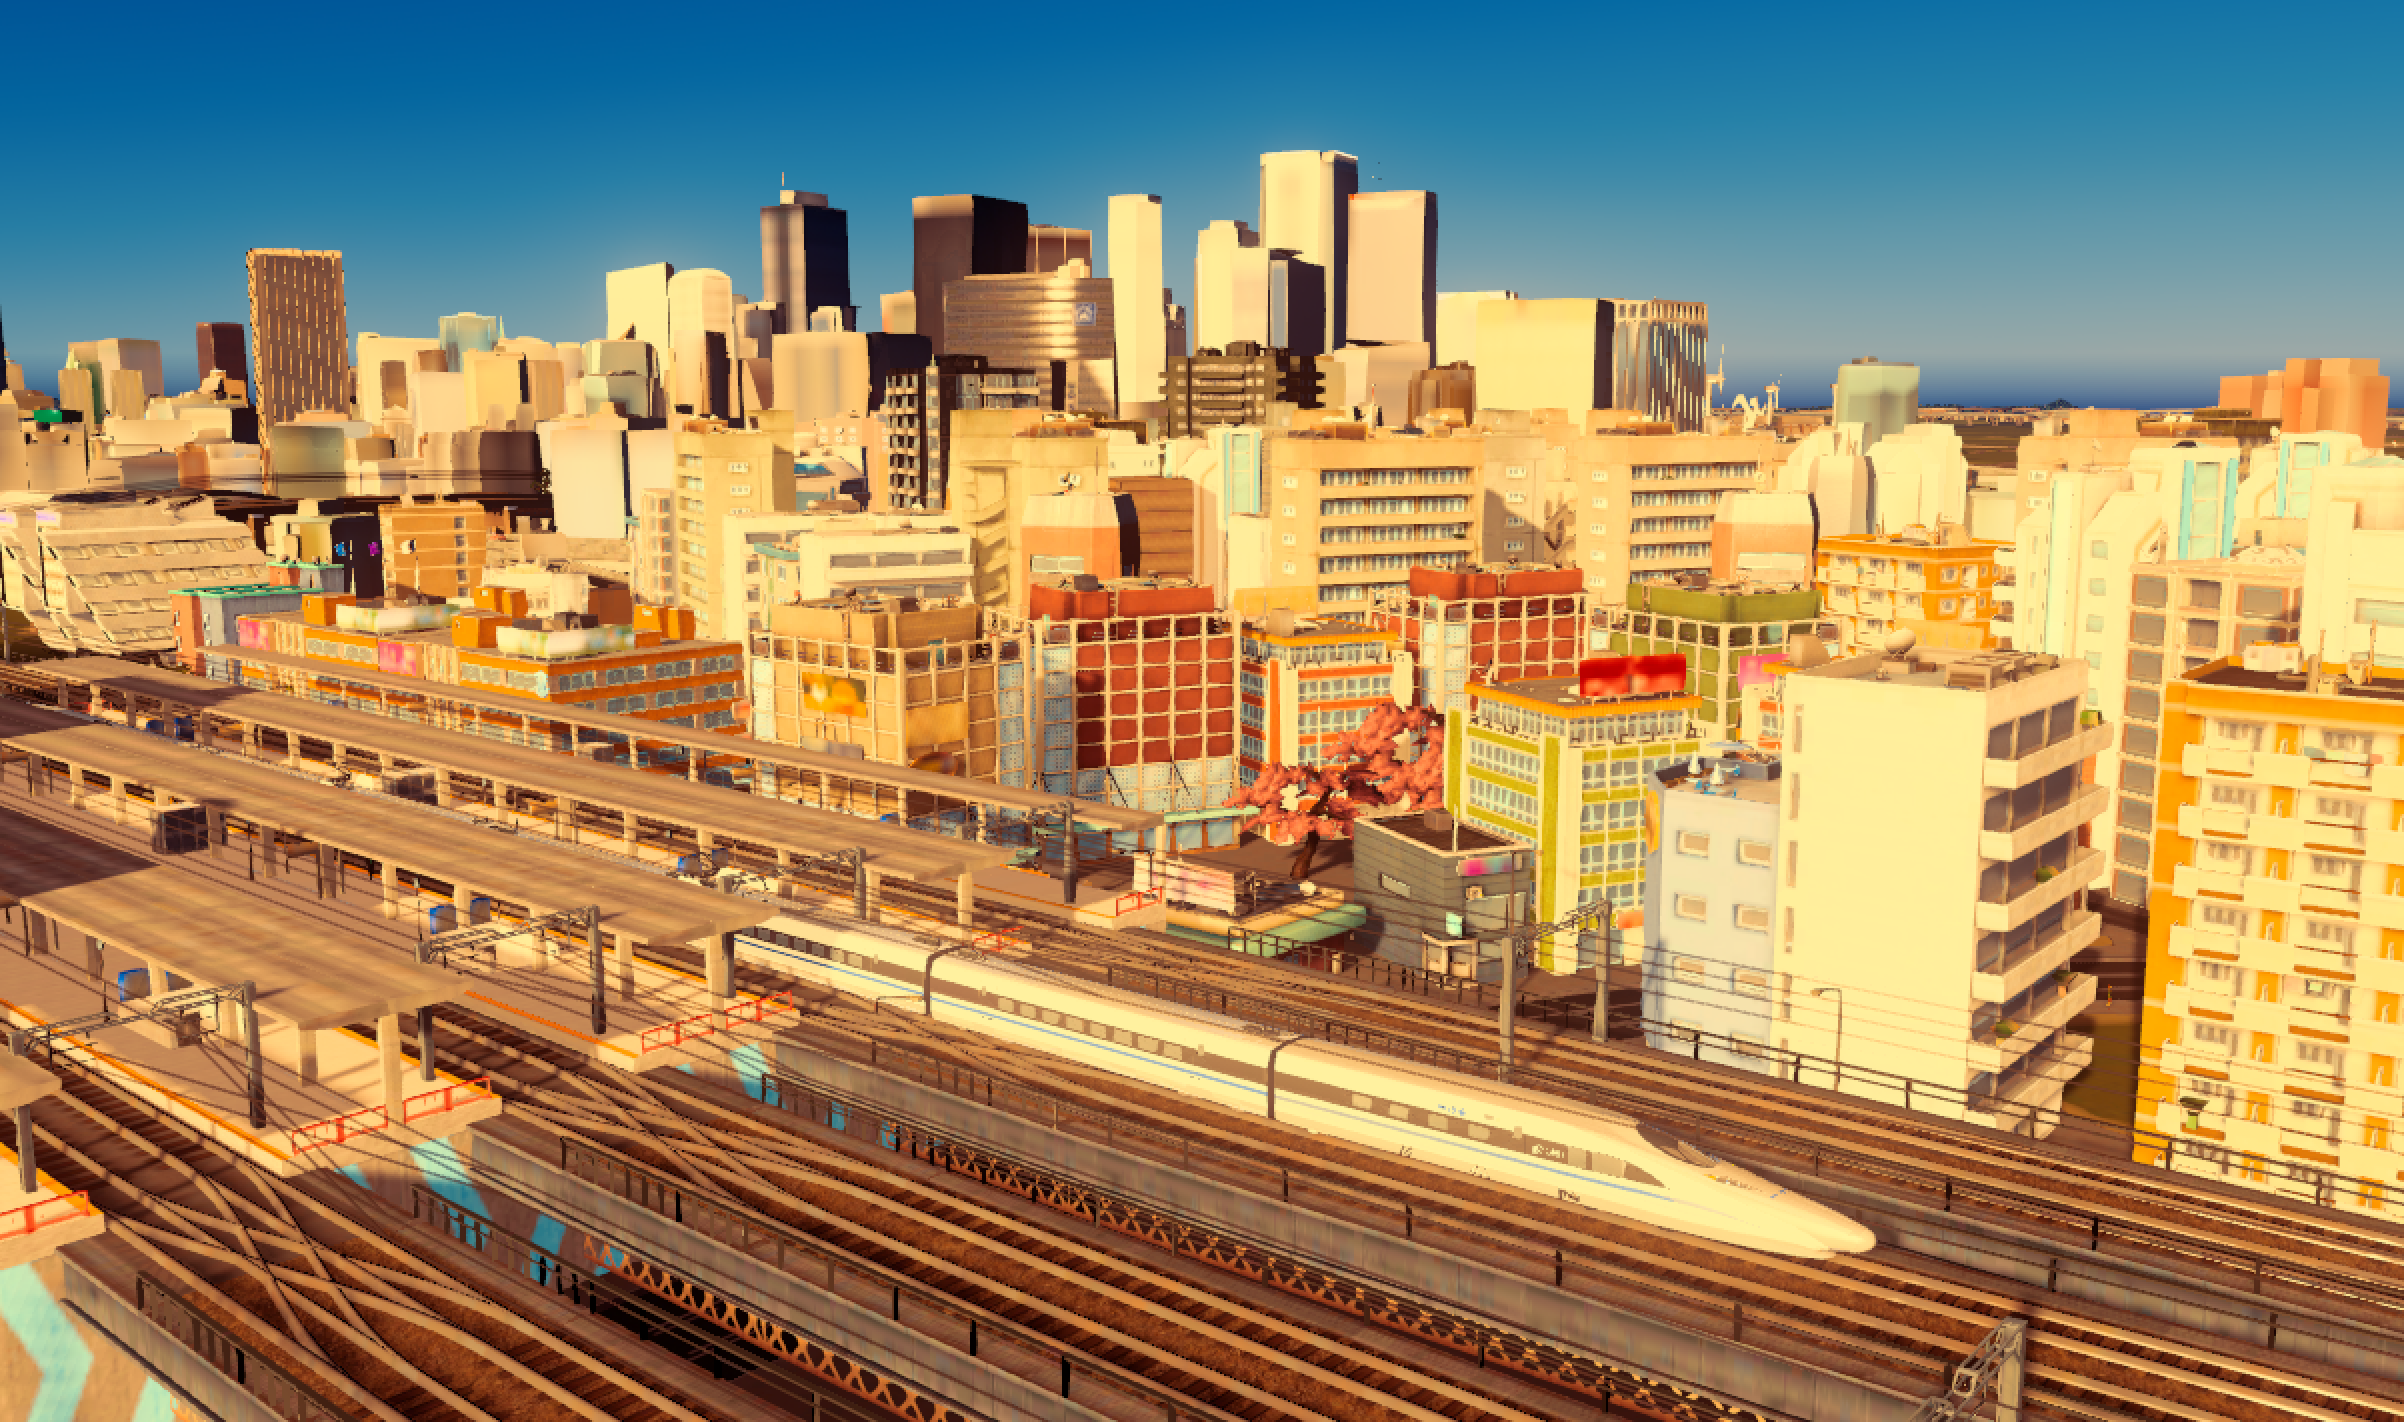 Cities Skylines: Japan Inspired City - Album on Imgur